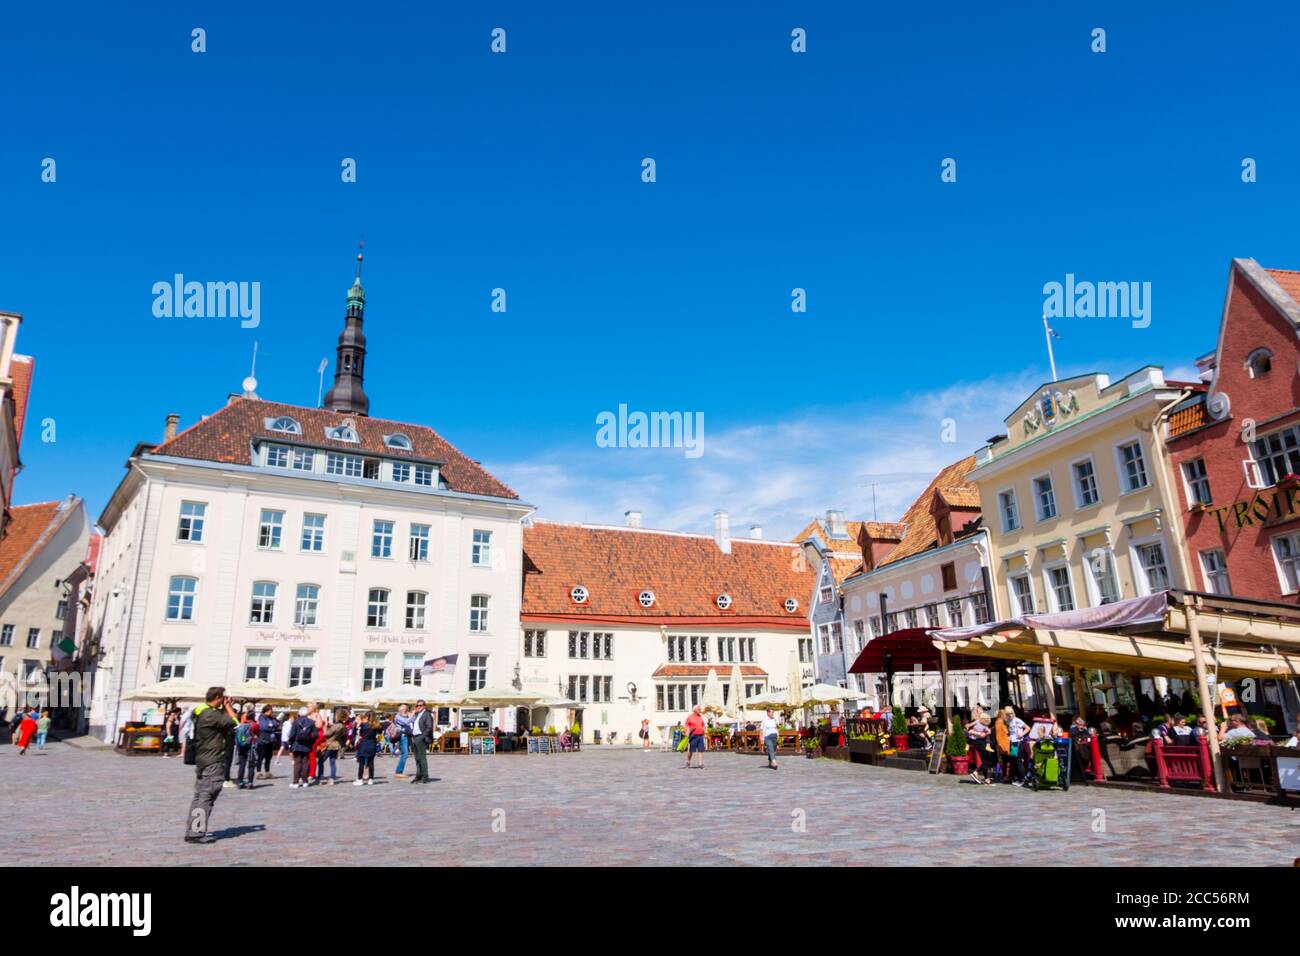 Raekoja plats, old town square, Tallinn, Estonia Stock Photo